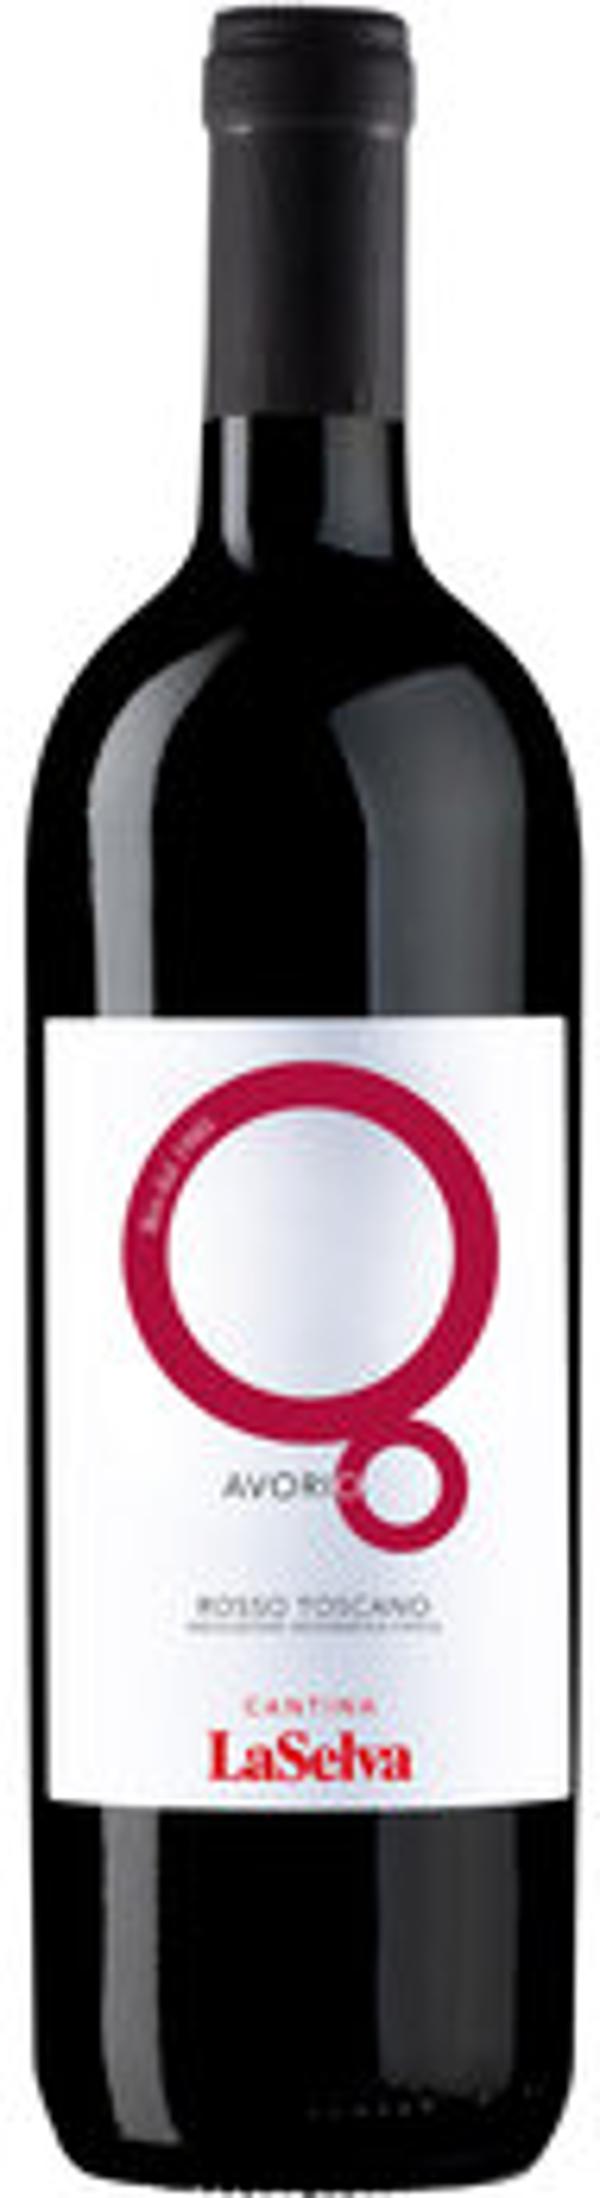 Produktfoto zu Rotwein Avorio Rosso Toscano 0,75l